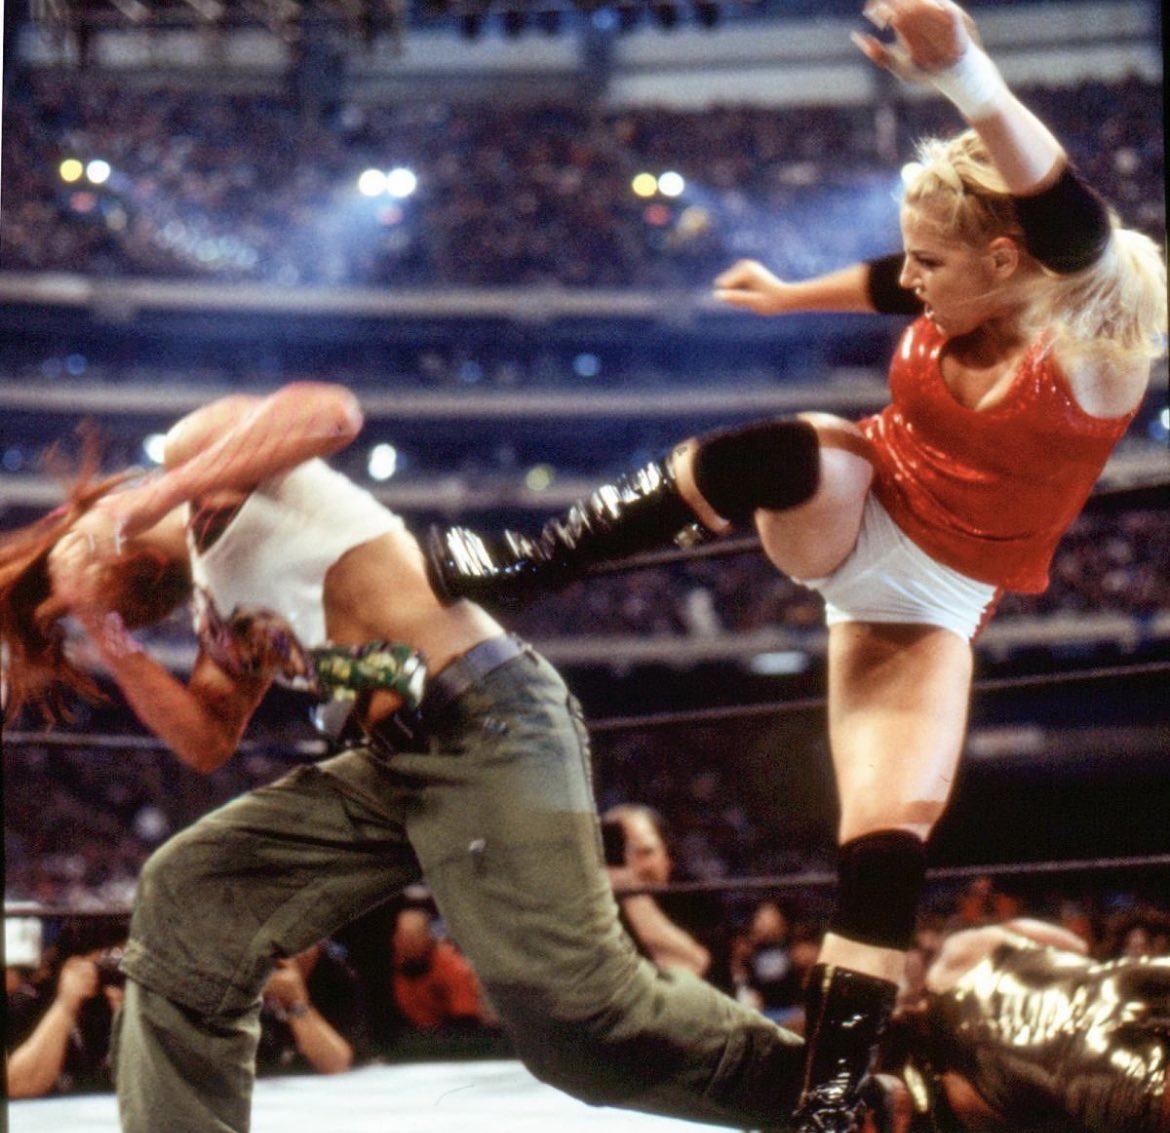 On This Day in Wrestling History - Trish Stratus v Lita 20 years ago today at Wrestlemania (3/17/02) @AmyDumas @trishstratuscom https://t.co/l6AdDsaslb